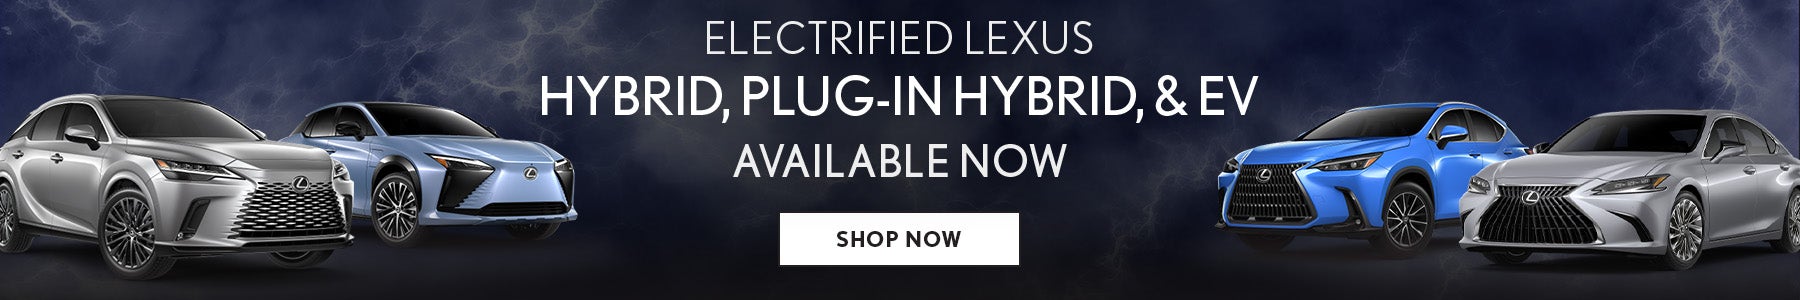 Electrified Lexus